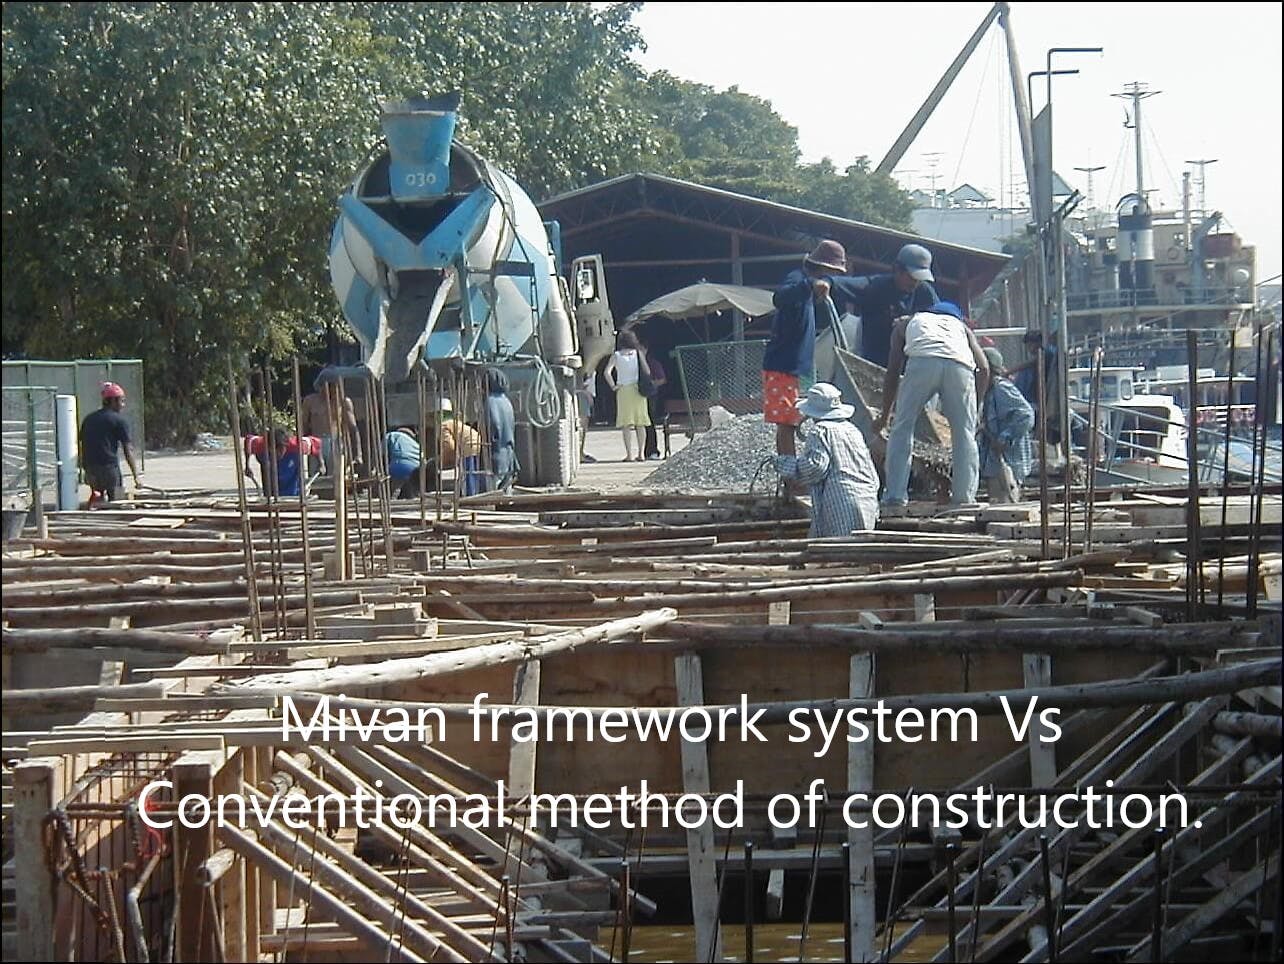 Mivan framework system Vs Conventional method of construction.